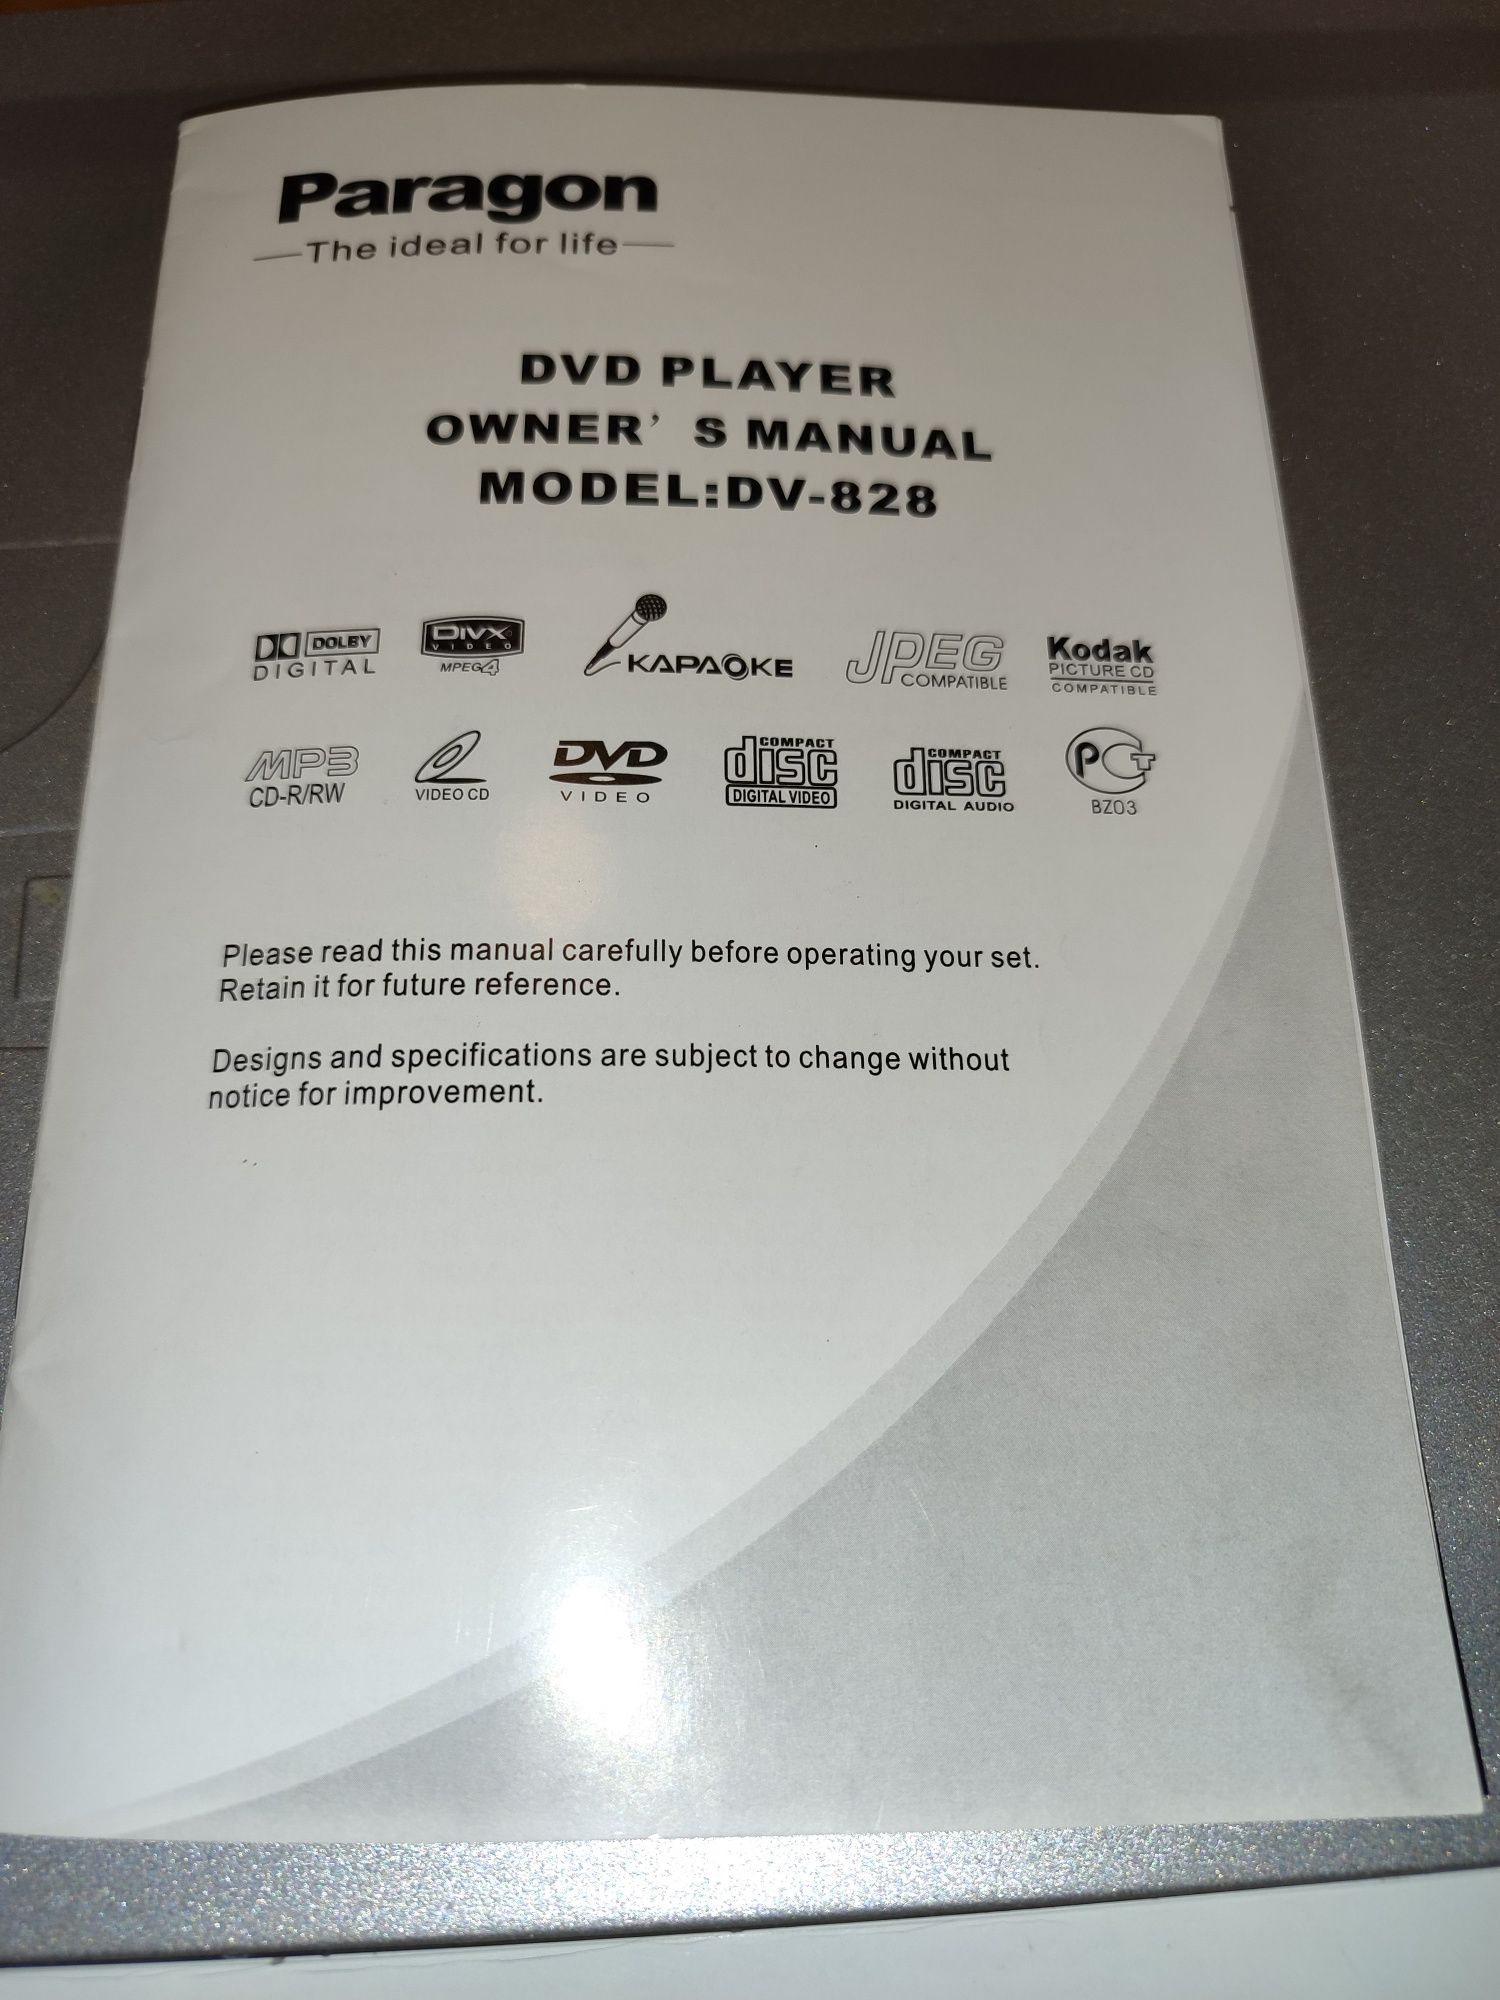 DVD player, Paragon - Model DV-828